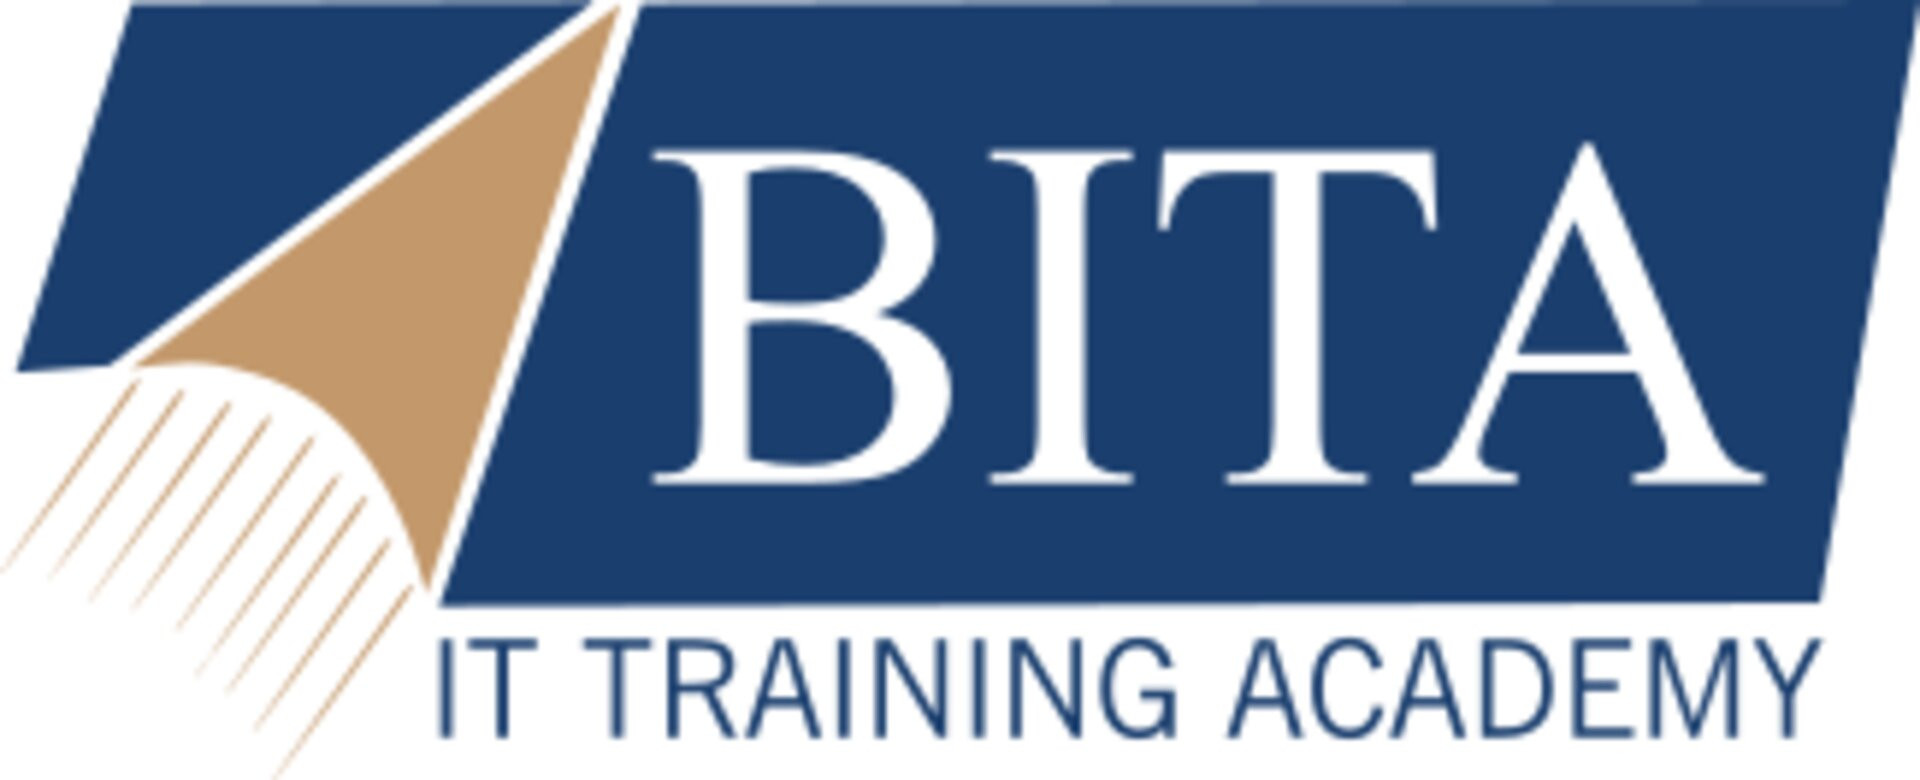 Bita academy